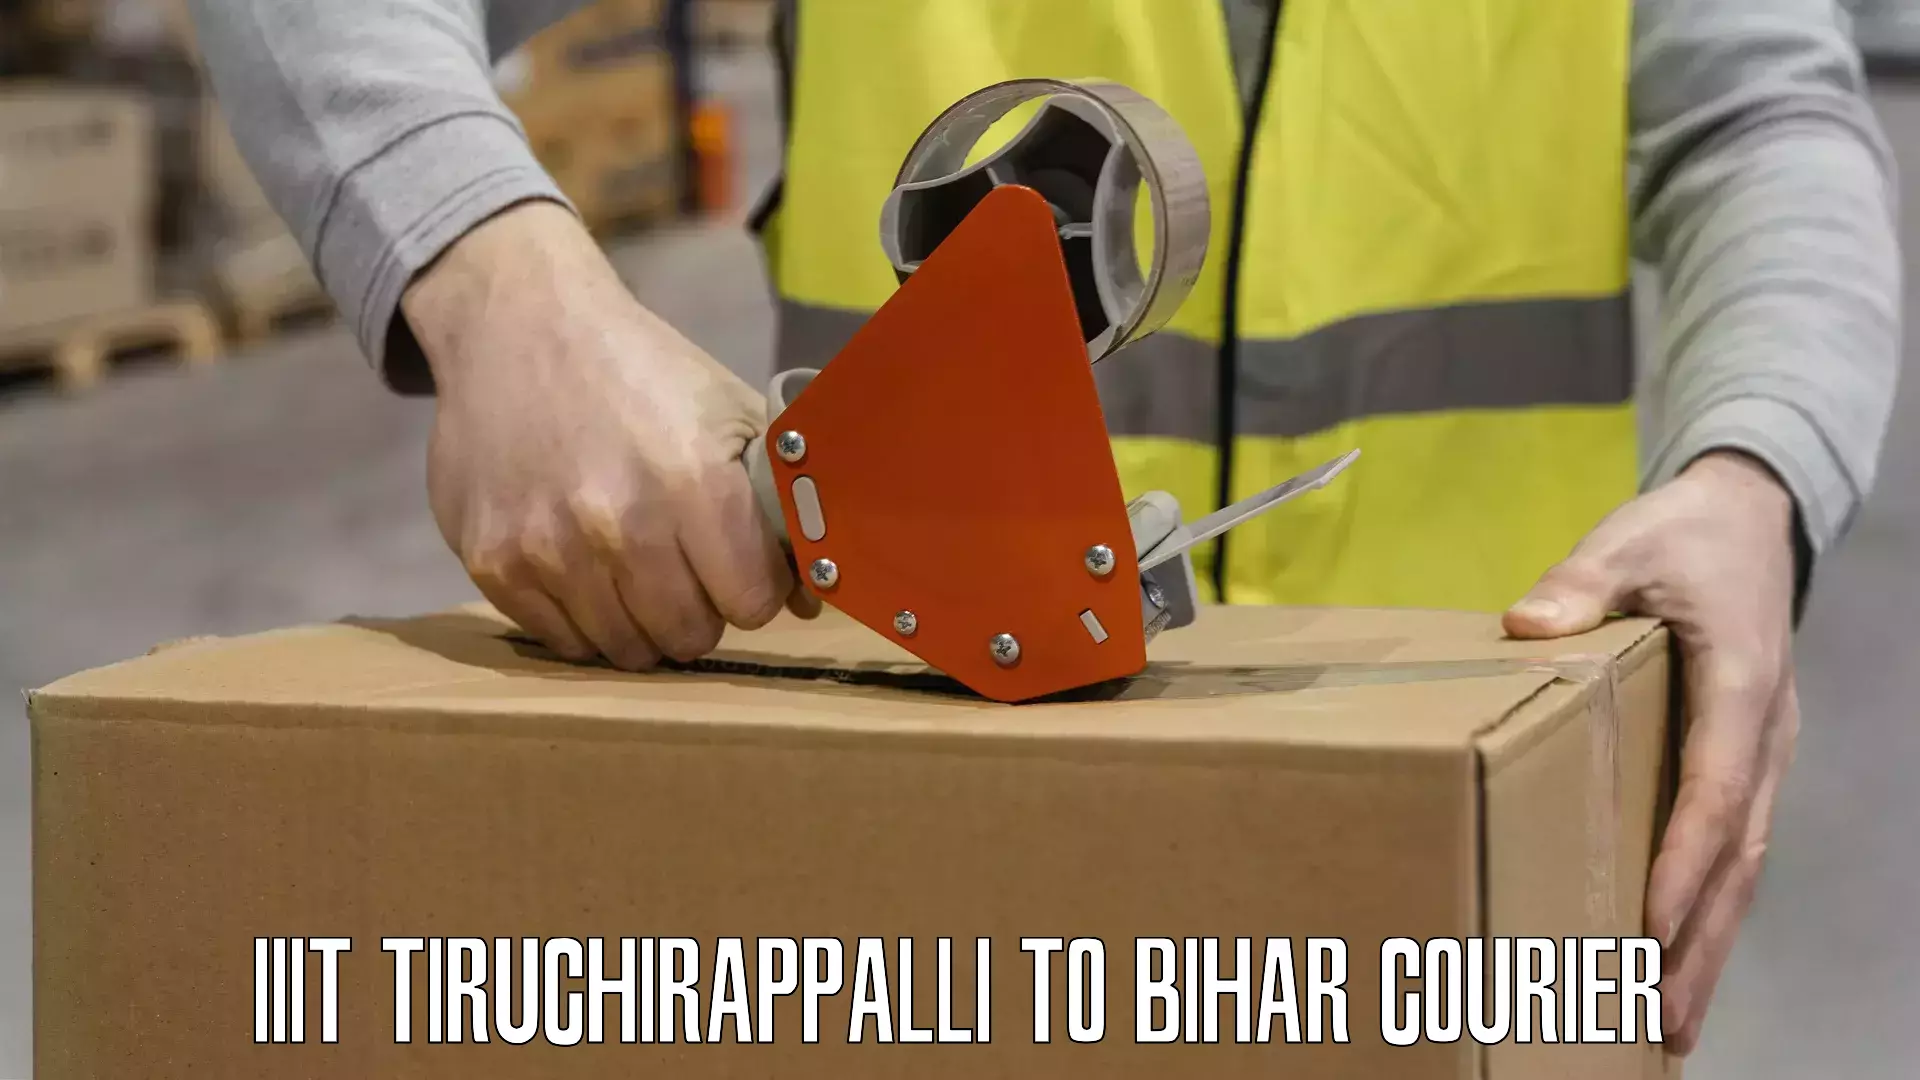 Reliable courier service IIIT Tiruchirappalli to Biraul